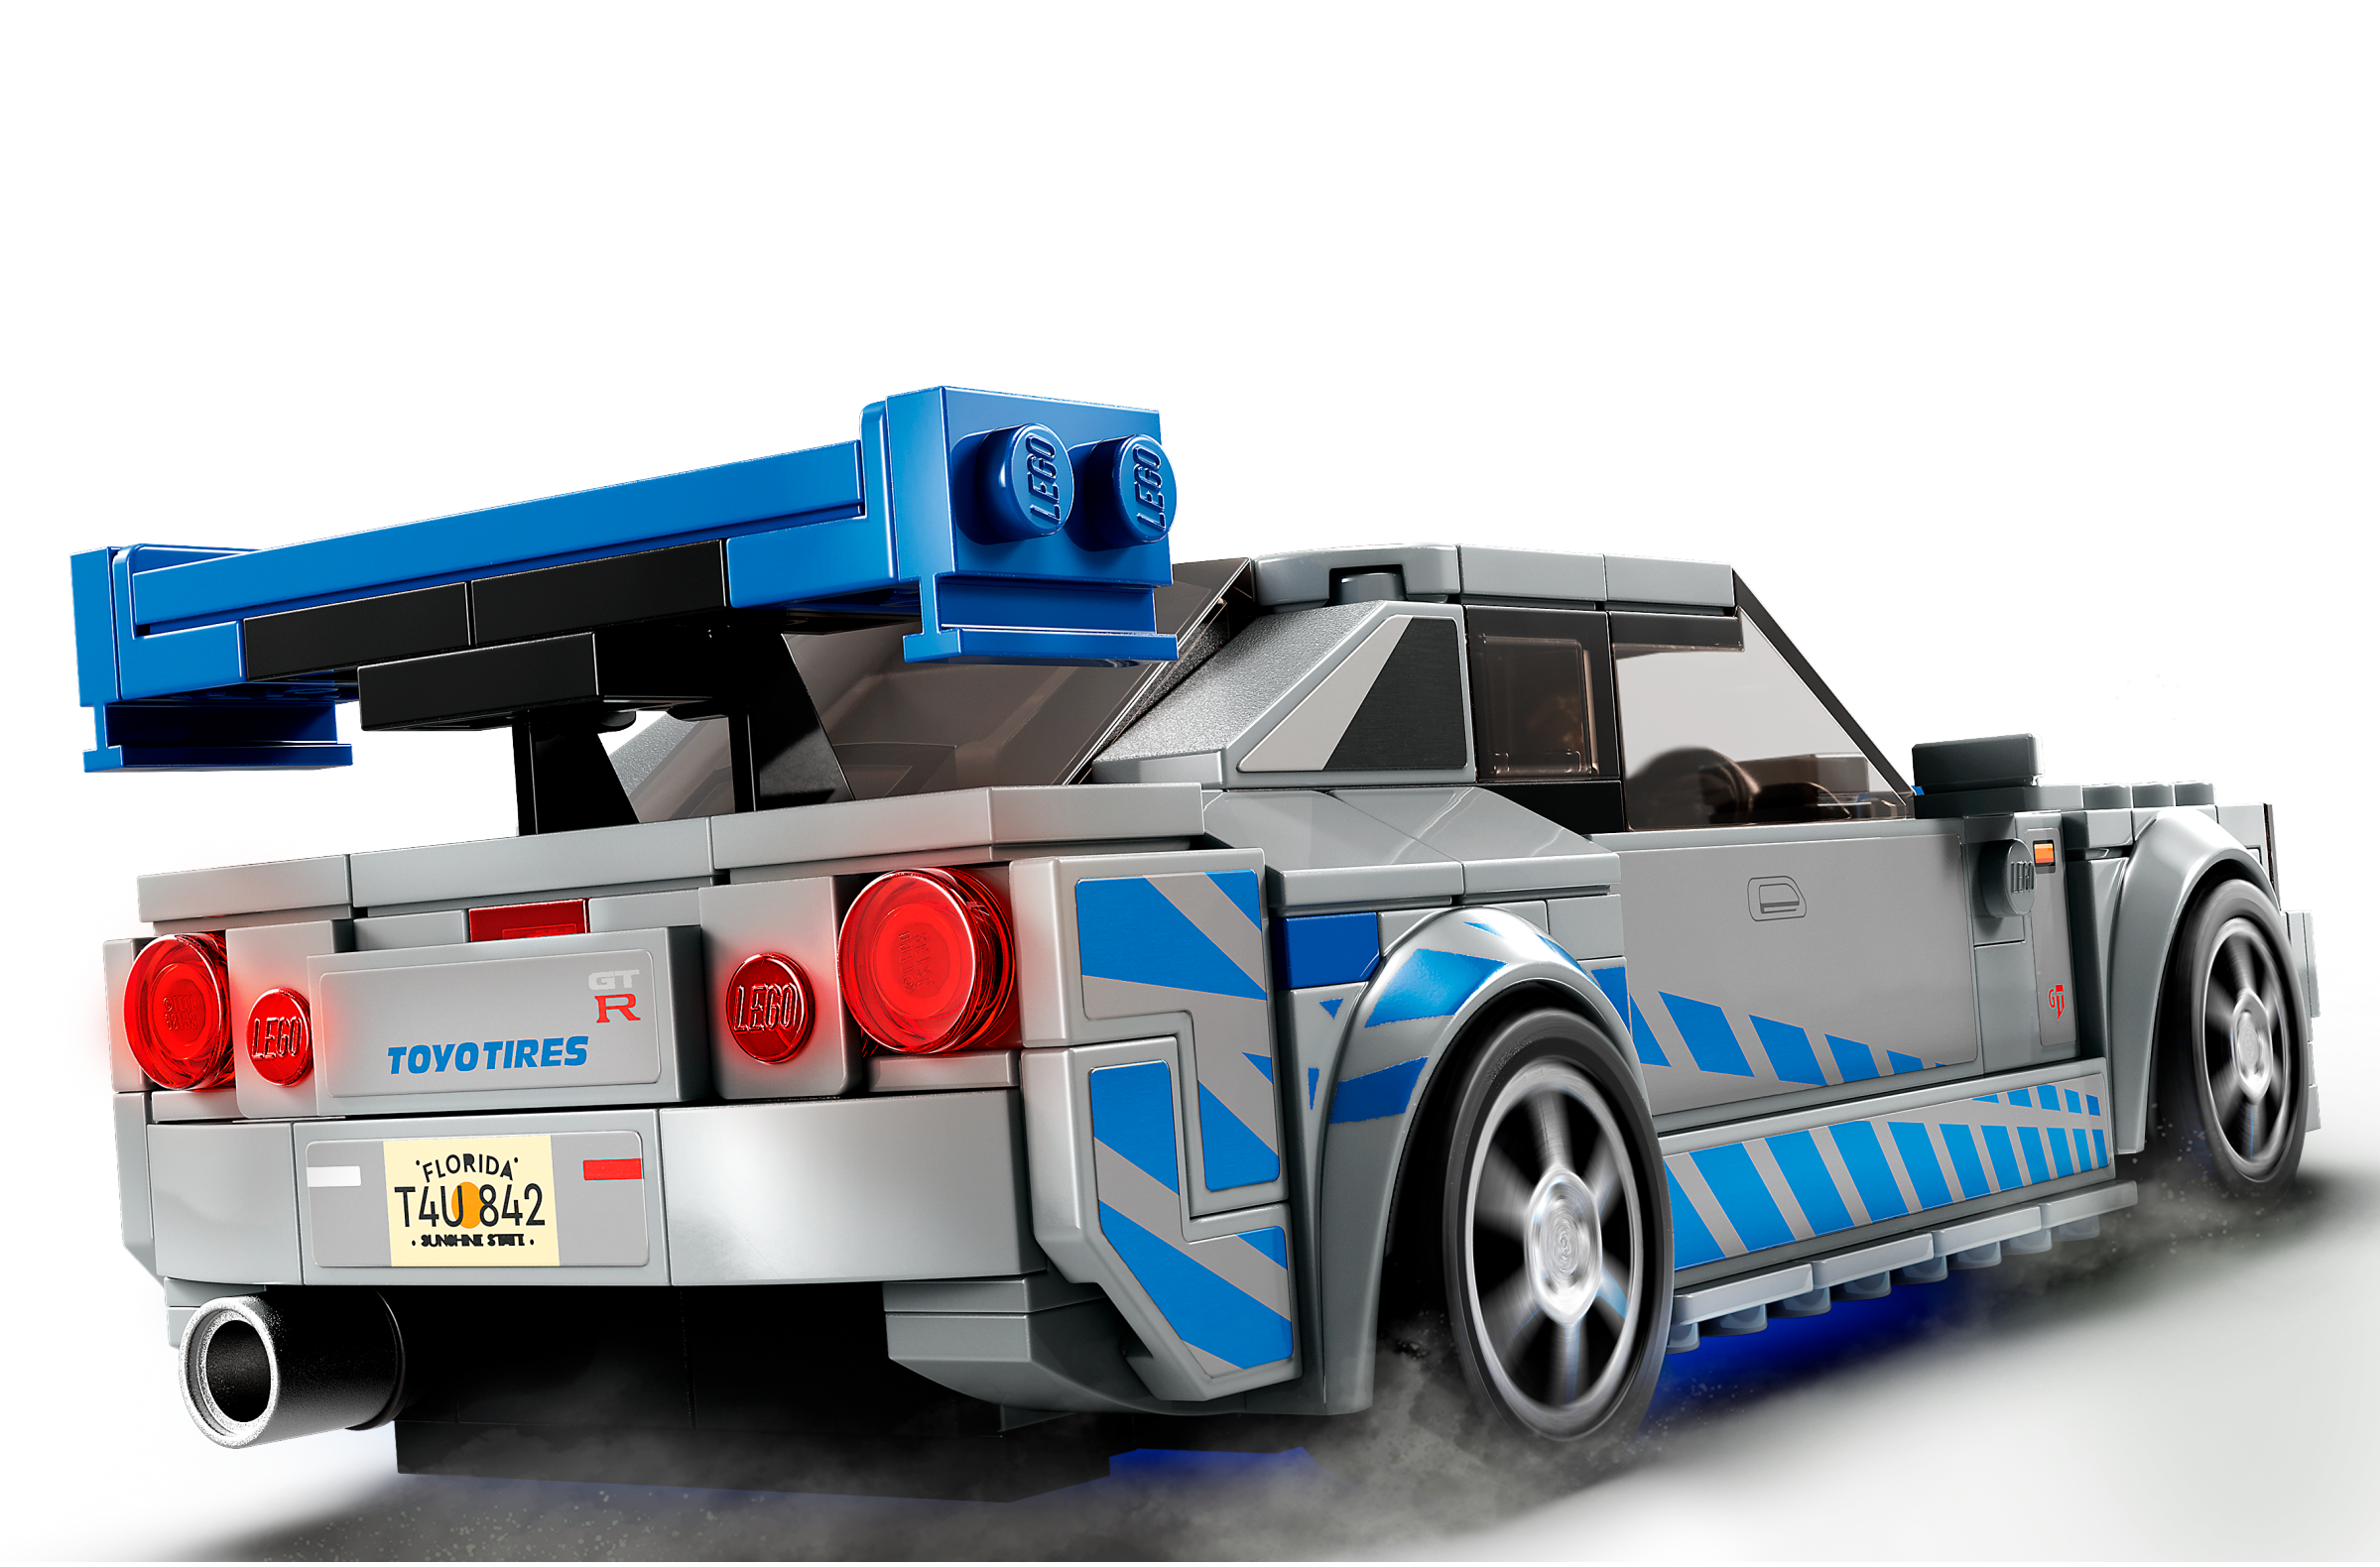 LEGO MOC Nissan Skyline R34 GTR with Openable Doors, Hood, and Trunk by  BluesCarLego